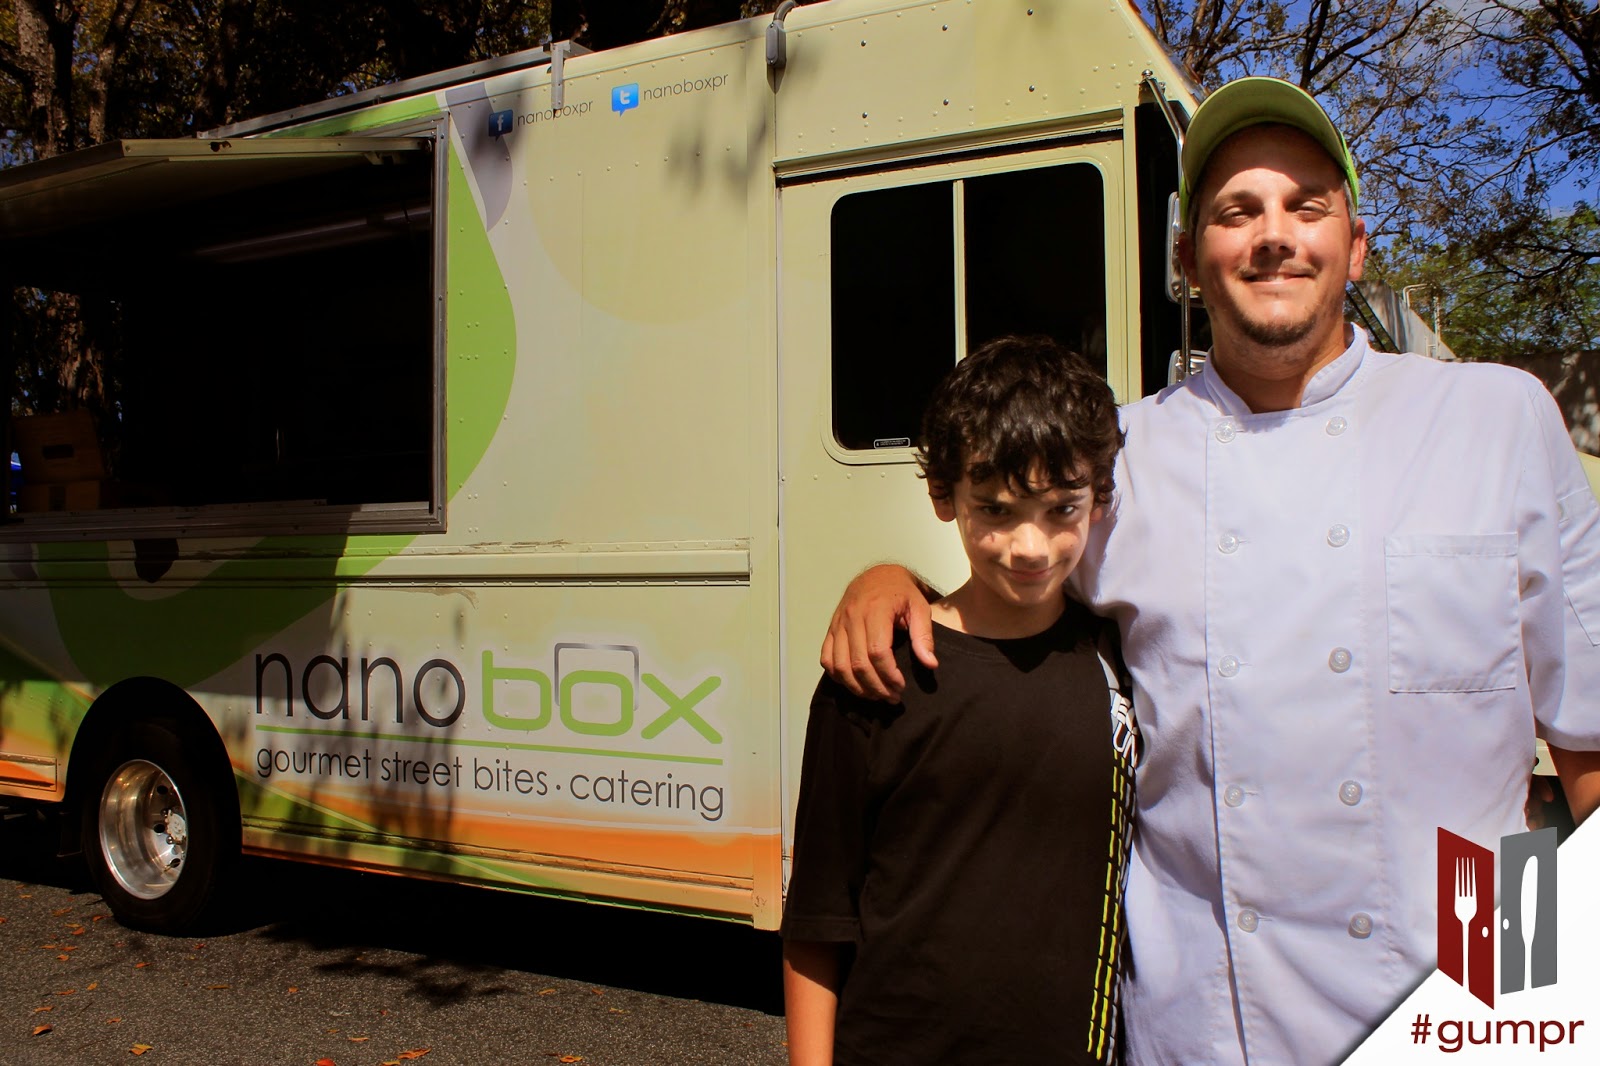 Chef Orlando “Nano” Rodriguez from Puerto Rico with his son Xavi